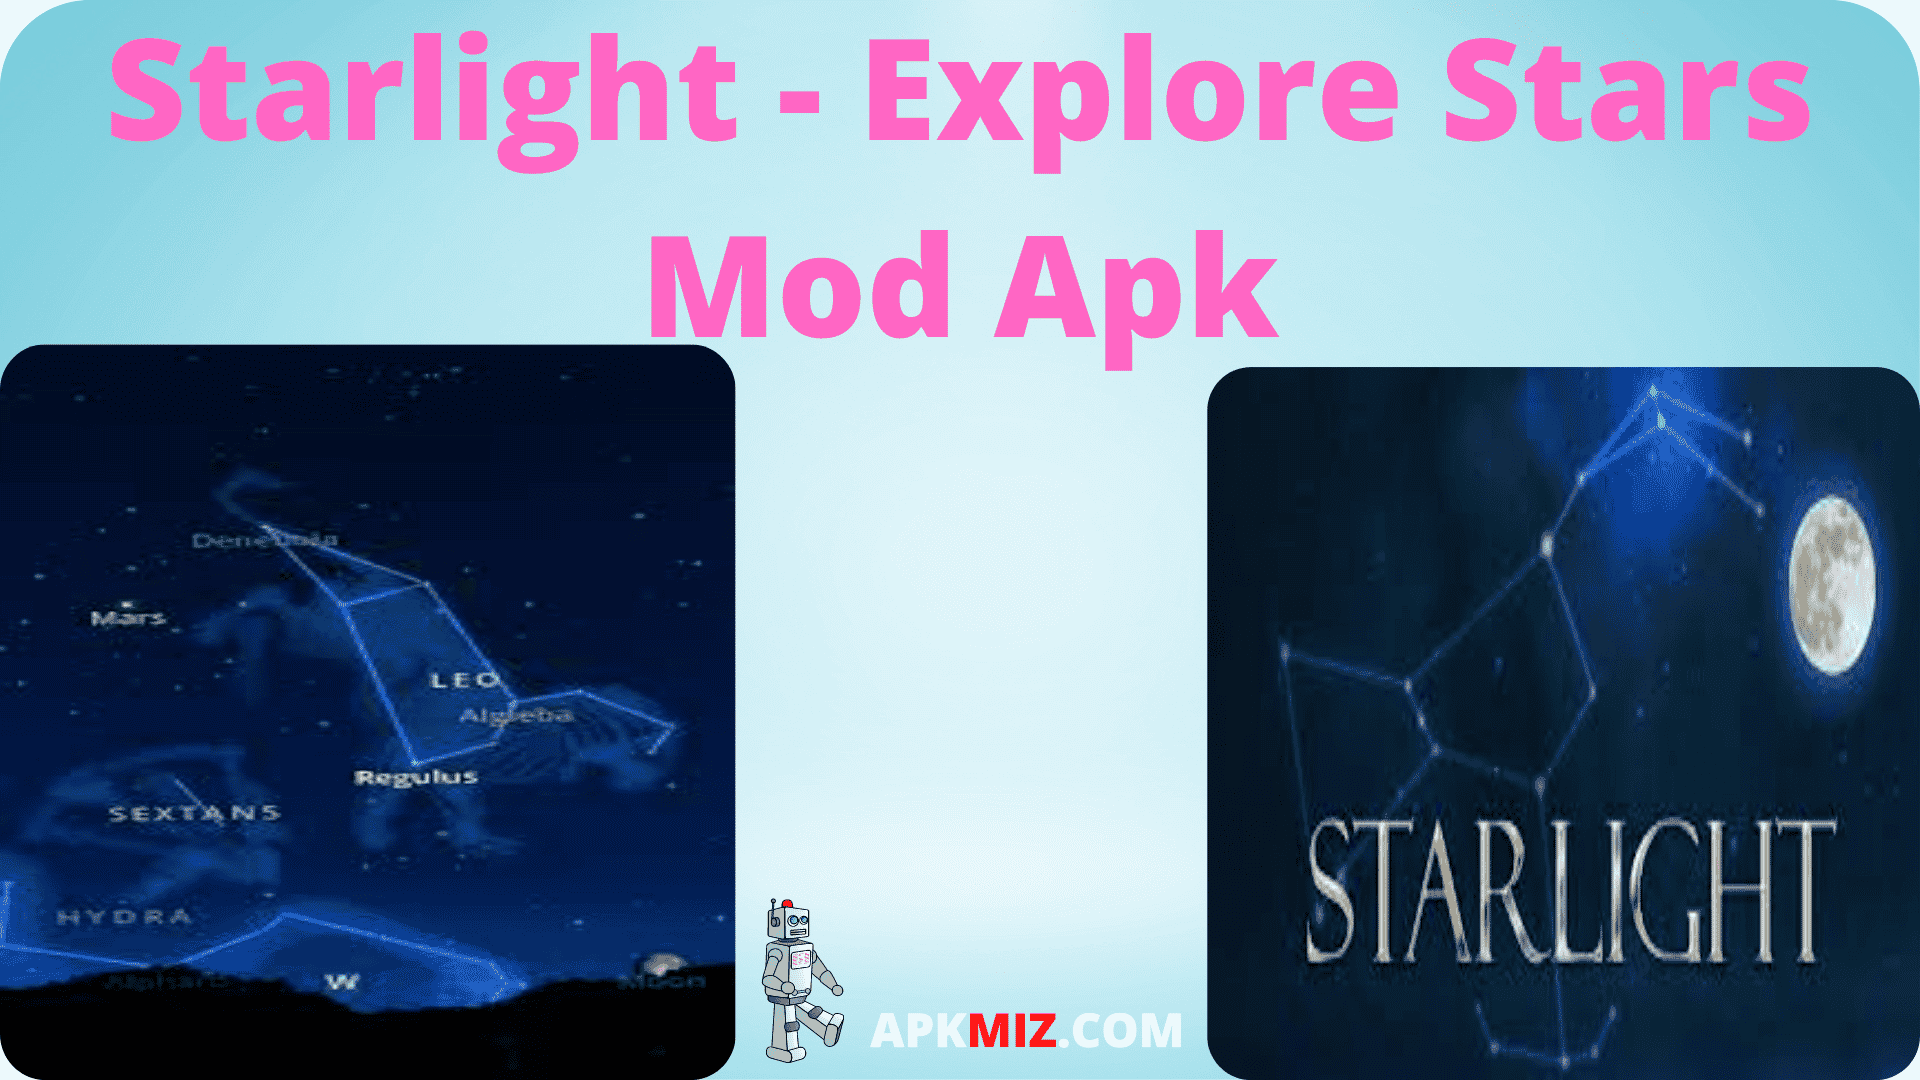 Starlight - Explore Stars Mod Apk